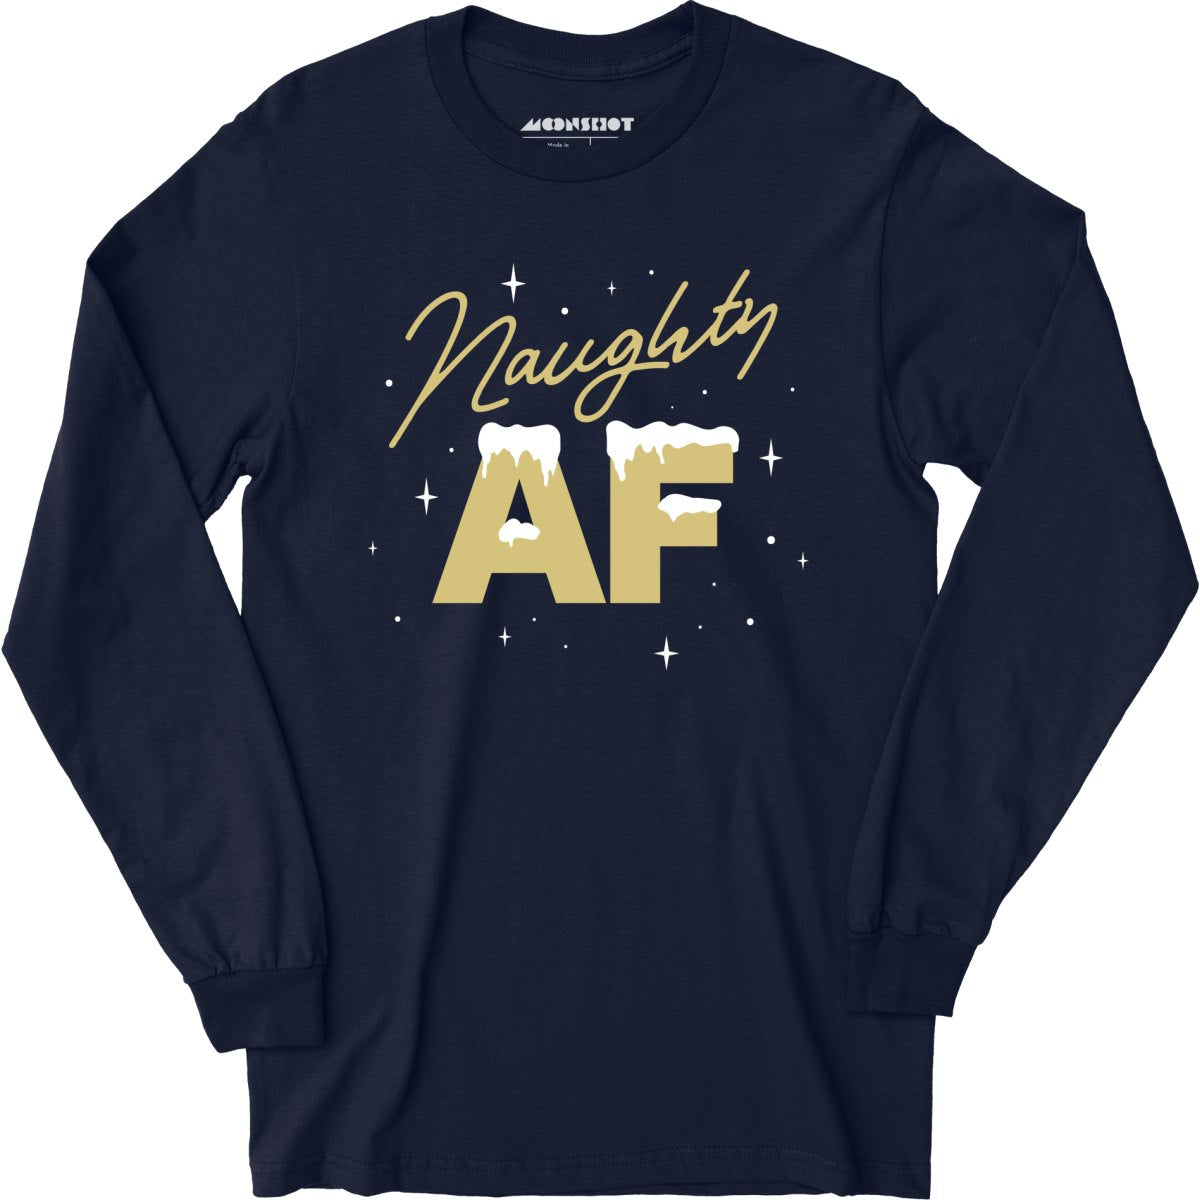 Naughty AF - Long Sleeve T-Shirt